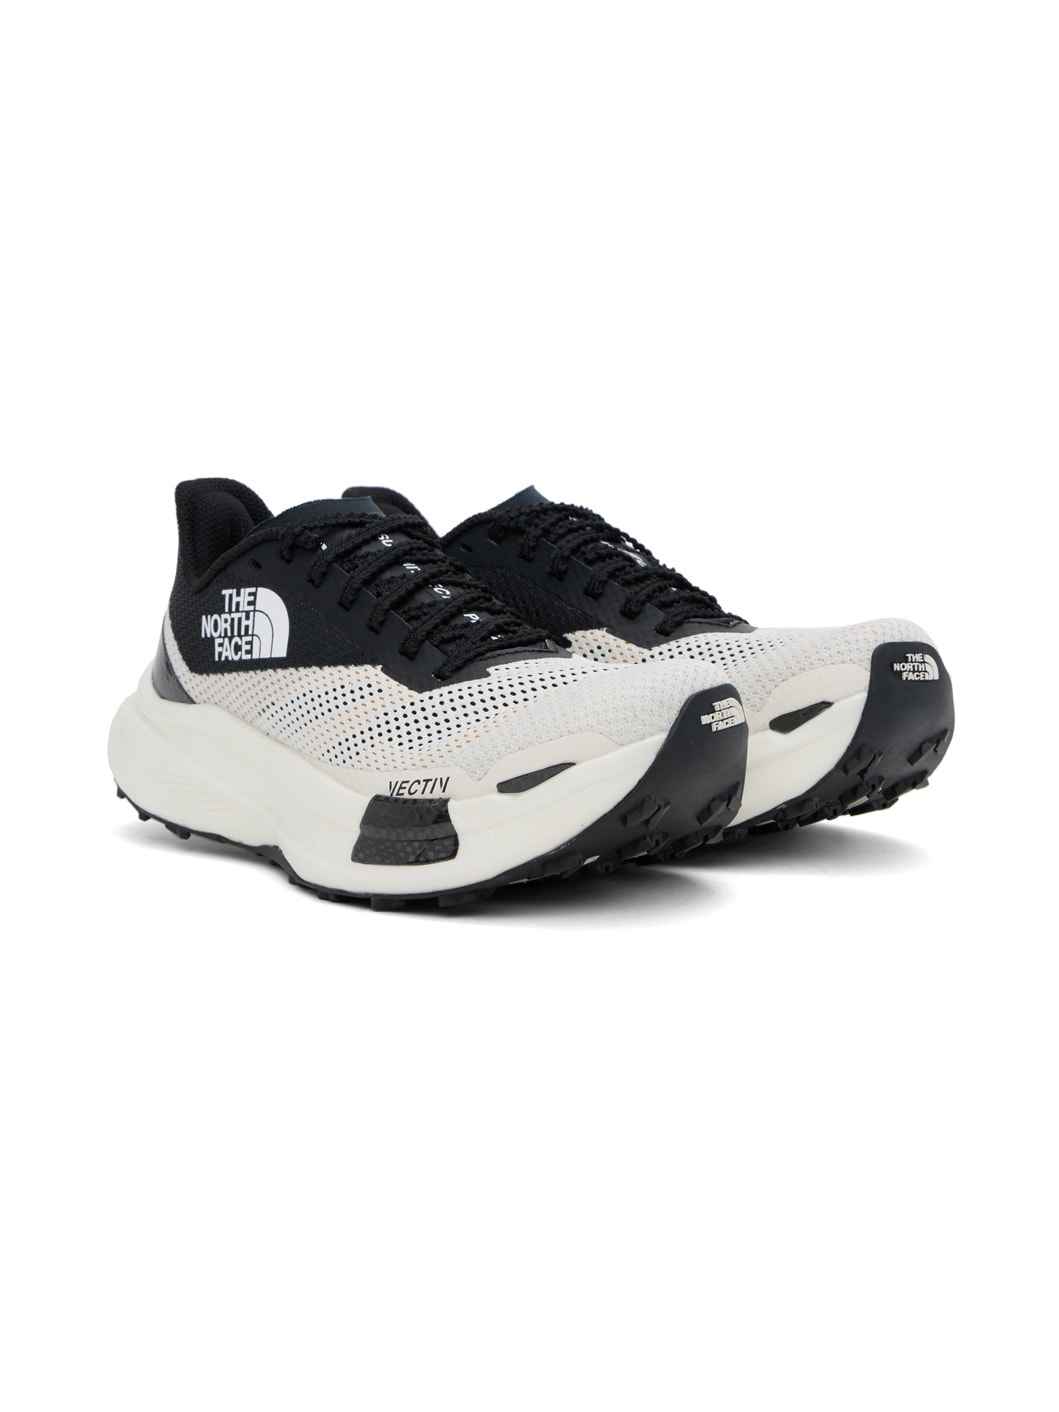 White & Black Summit Vectiv Pro II Trail Sneakers - 4